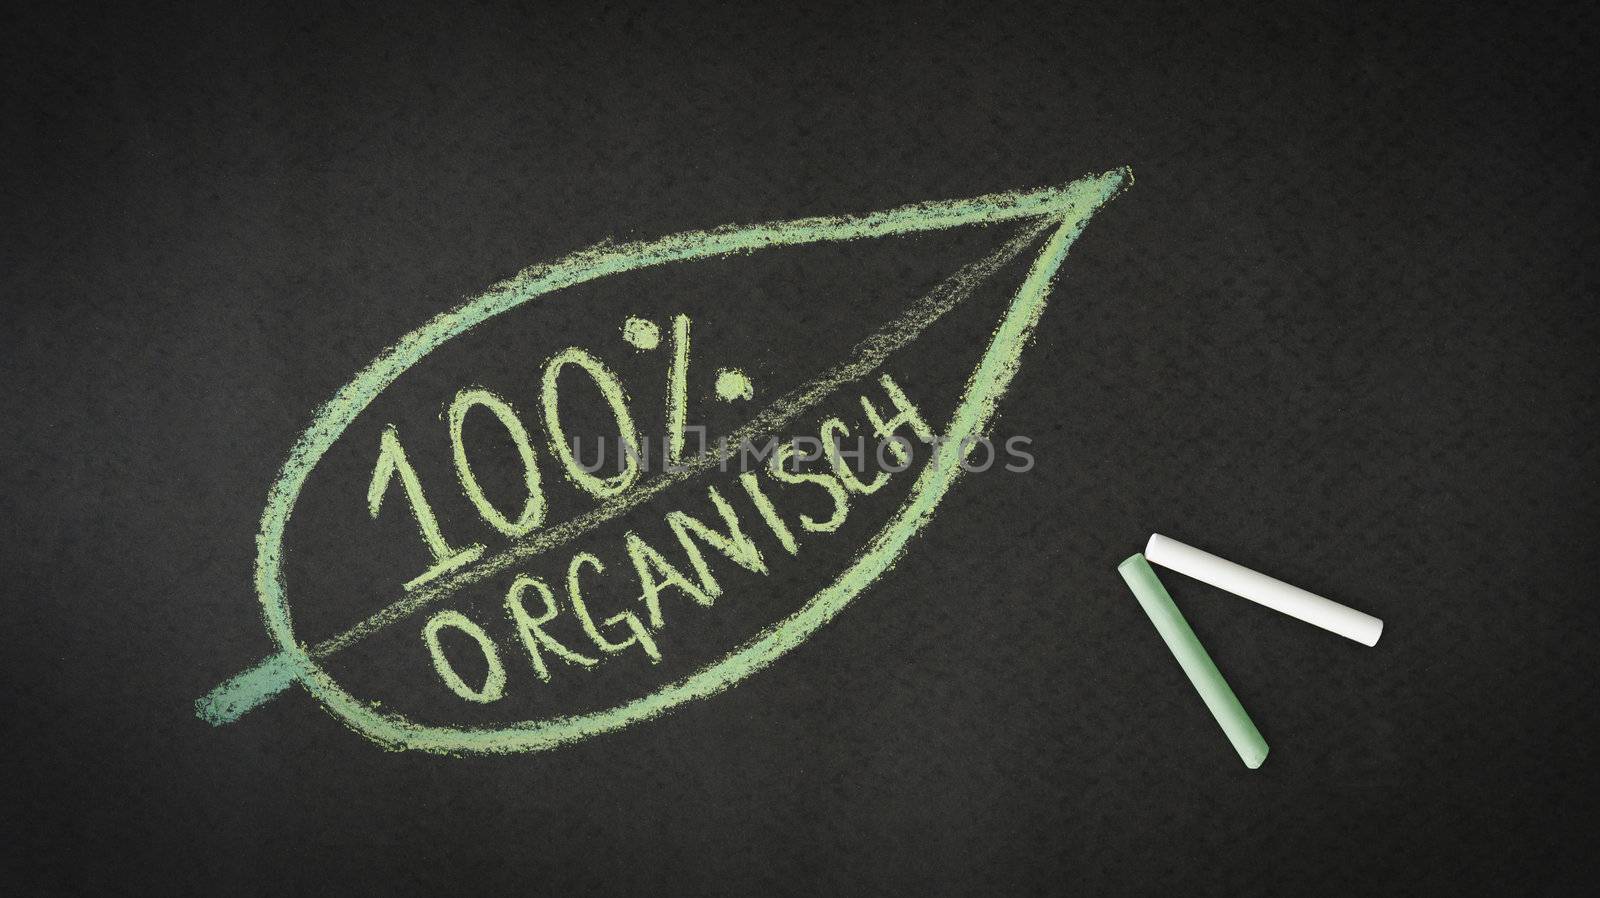 100 percent Organic chalk illustration on black background.